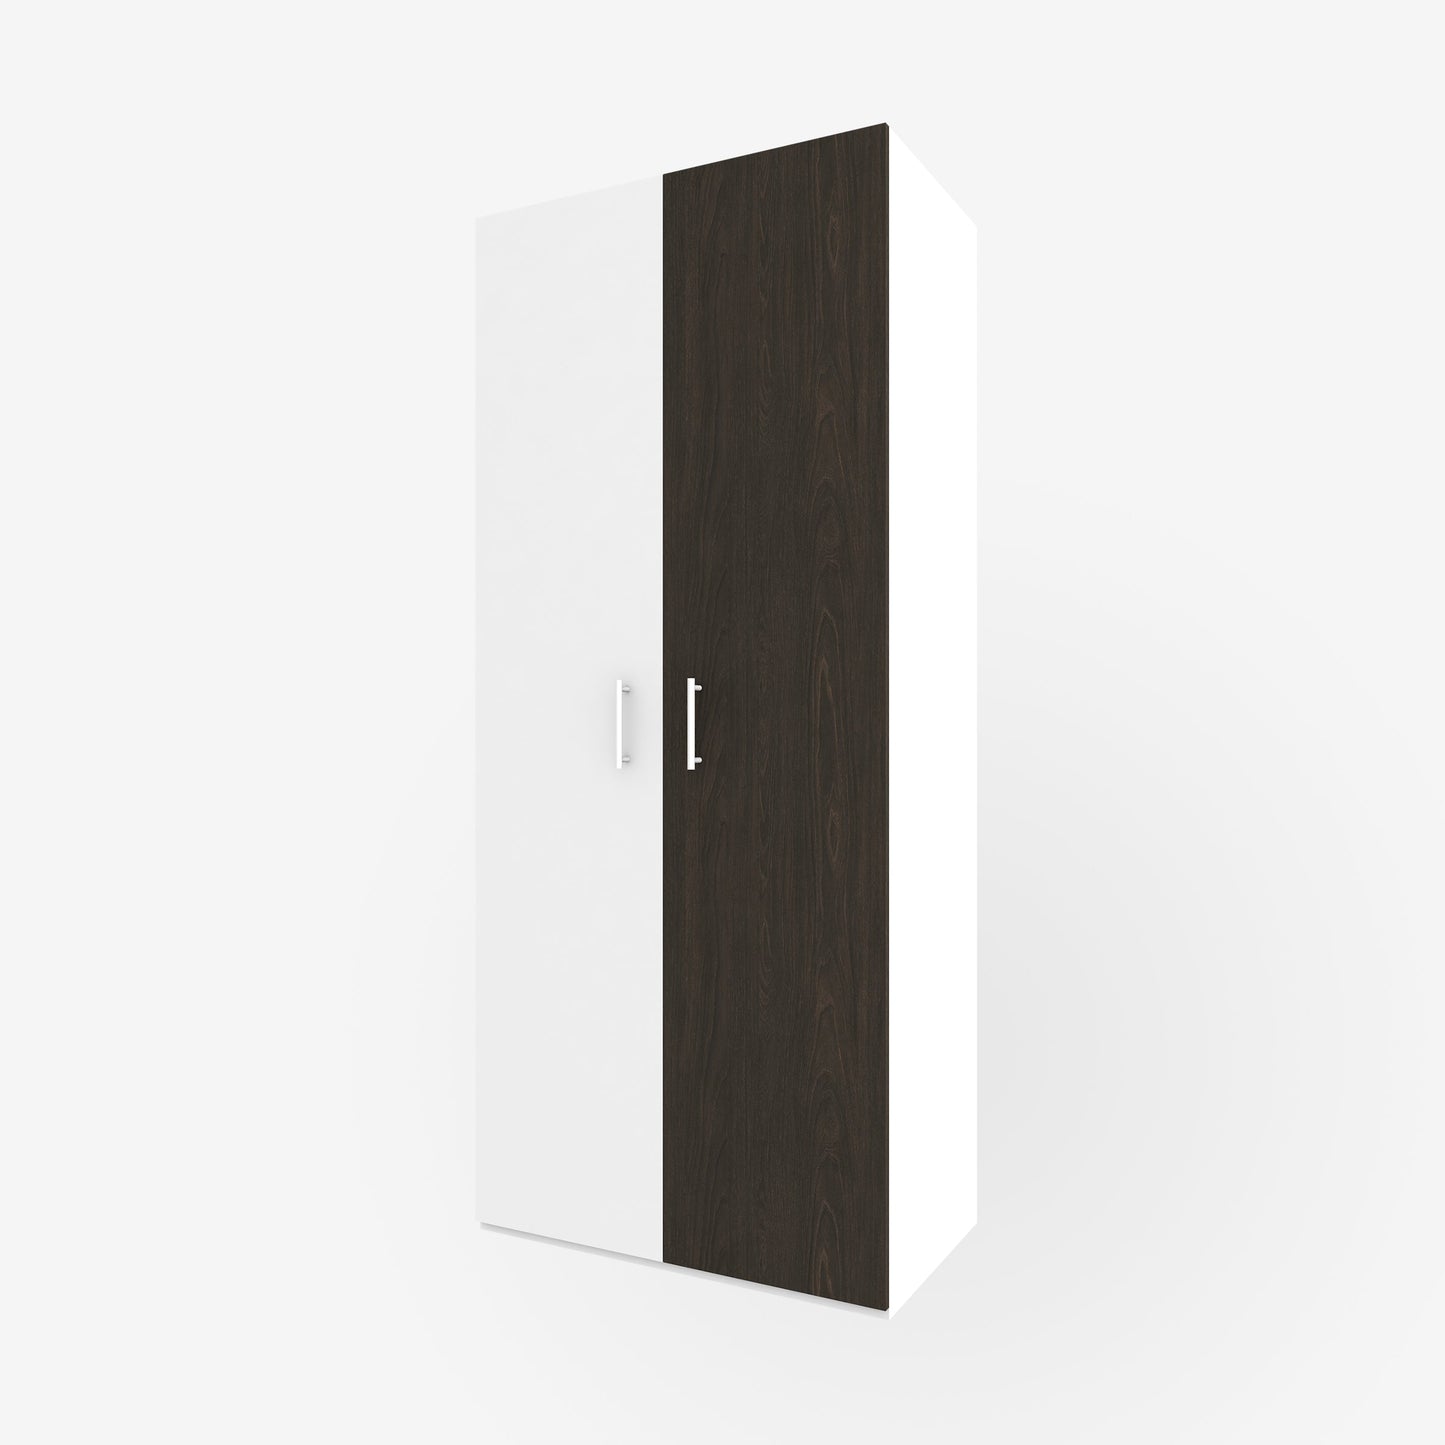 19.5" x 93" dark wood tone westwood slab door for Ikea or Swedeboxx pax closet cabinet